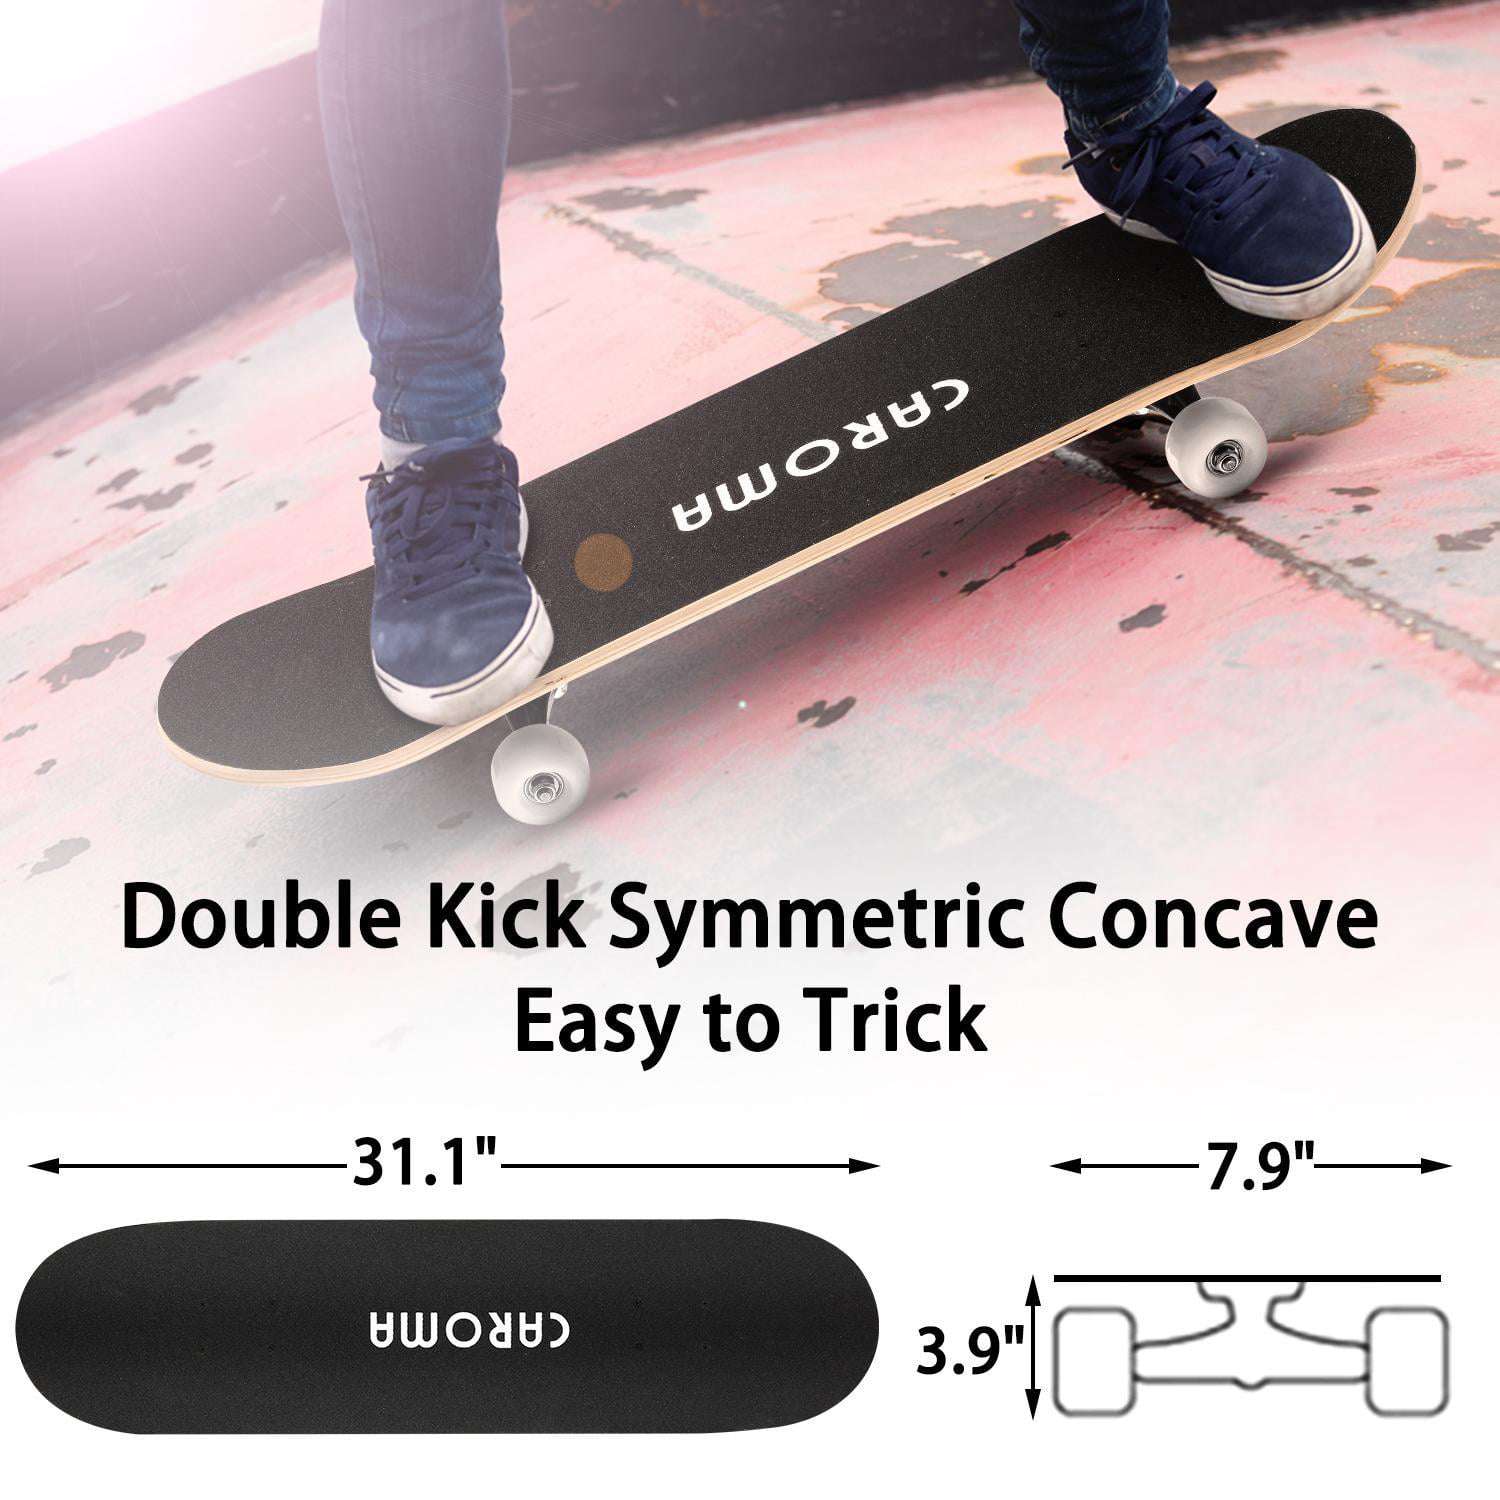 CAROMA Skateboard for Beginners Gift,31inch with Anti-Shock PU Wheels Skateboard 